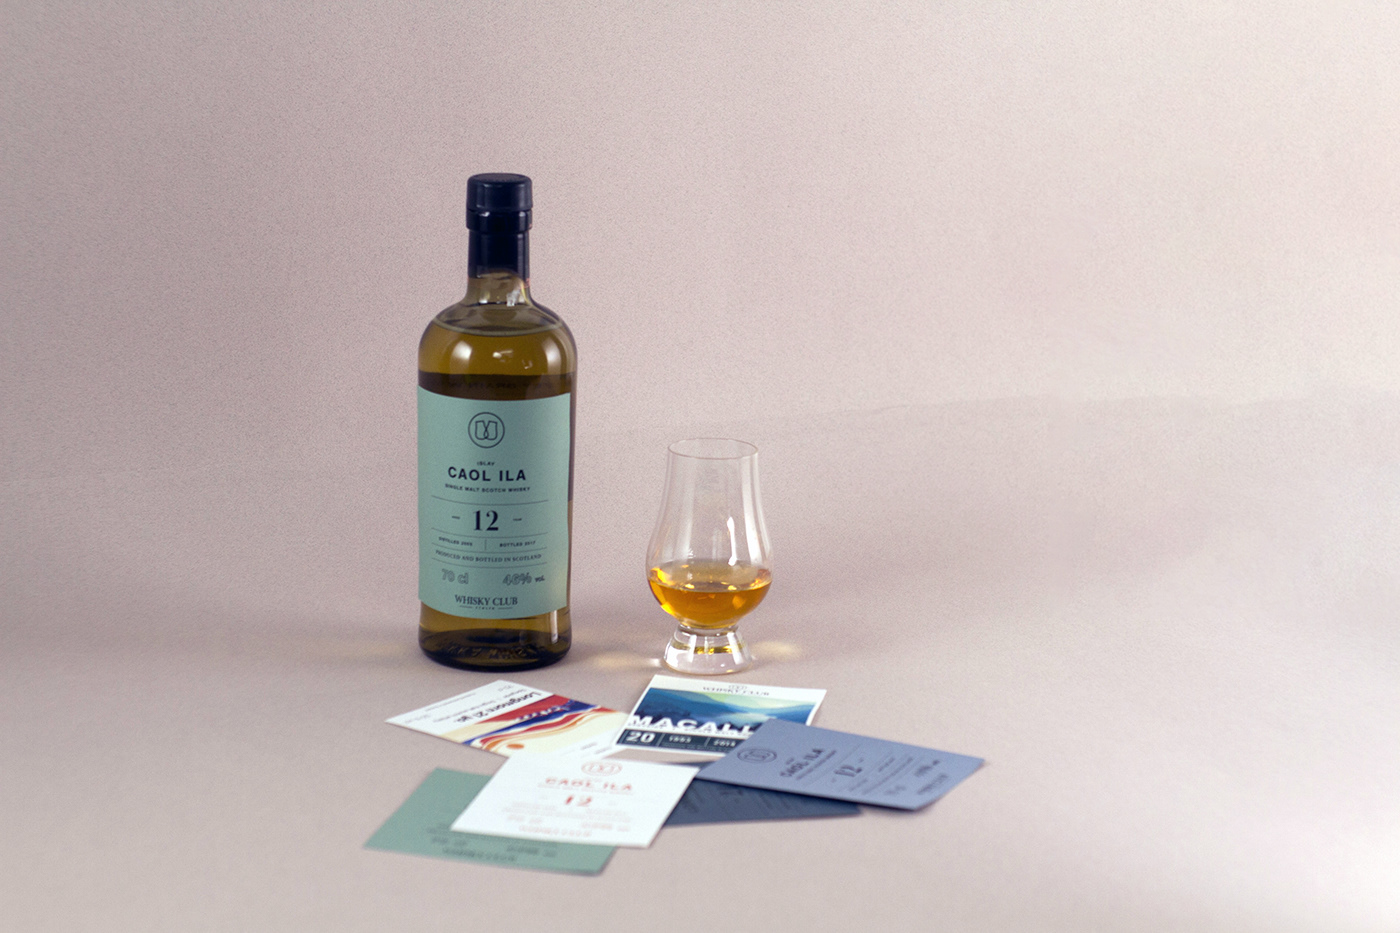 book brand identity brand manual identity logo Packaging Whisky